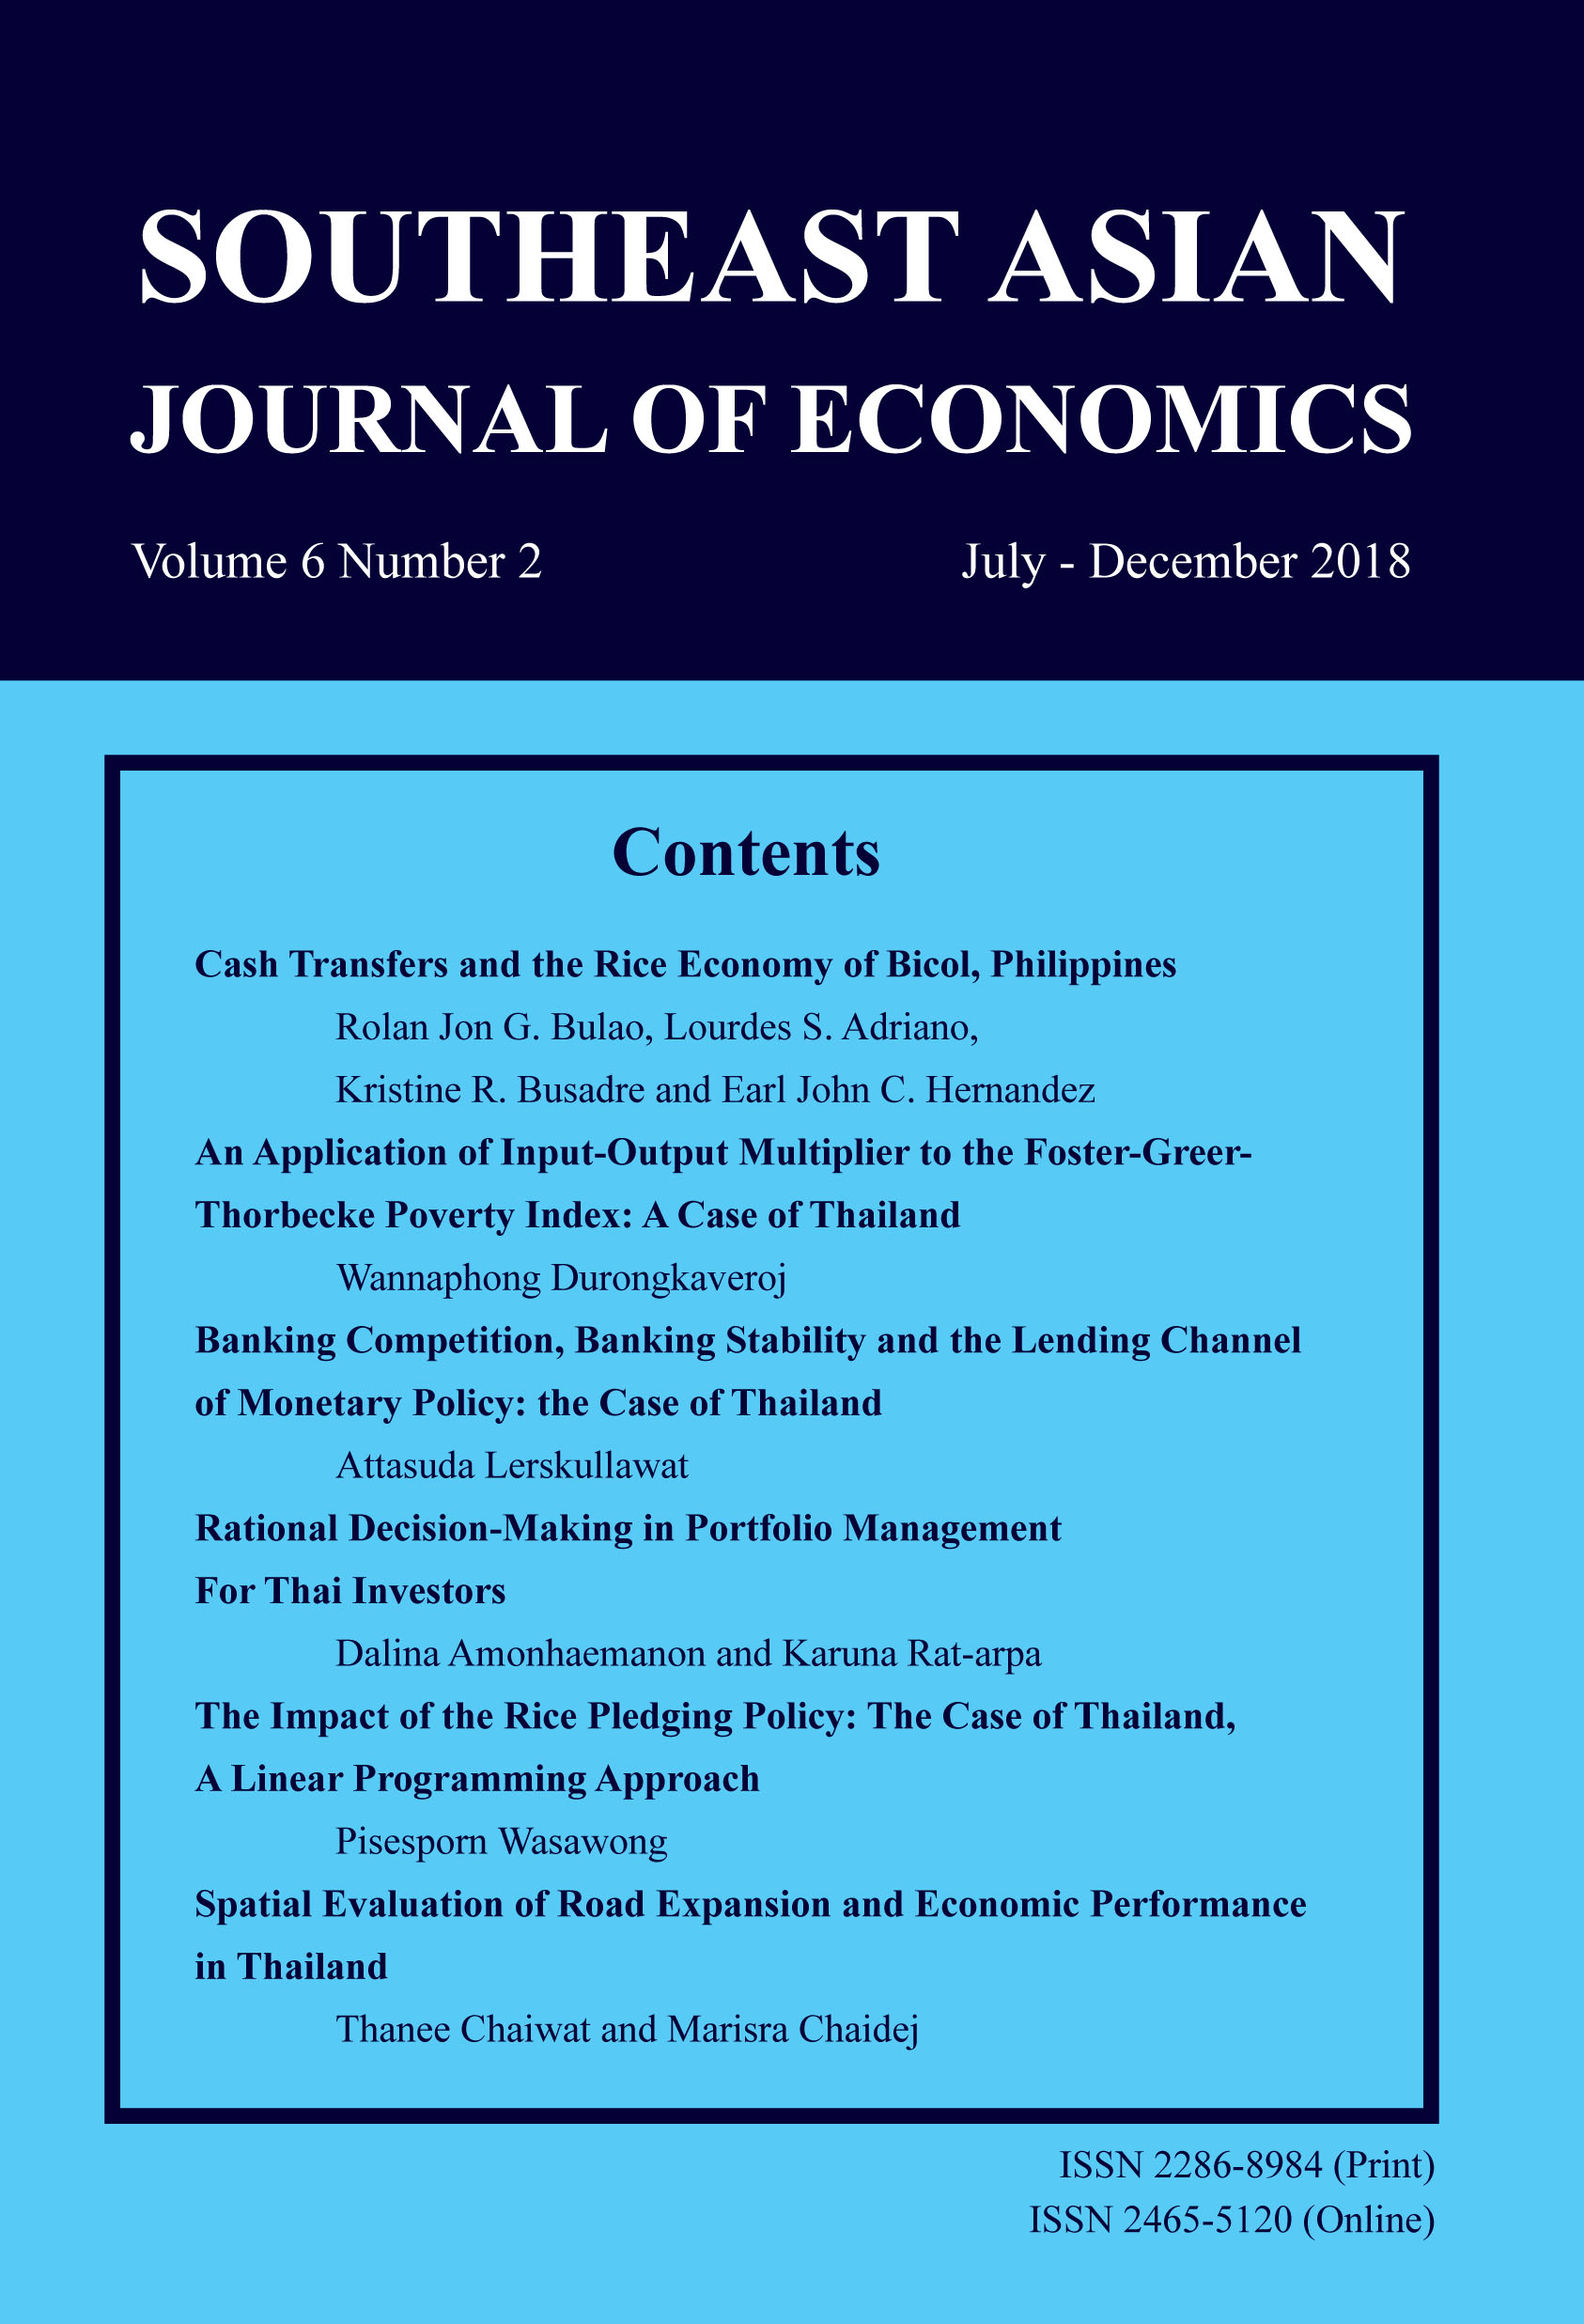 					View Southeast Asian Journal of Economics, Vol. 1 No. 1 (January - December 2013)
				